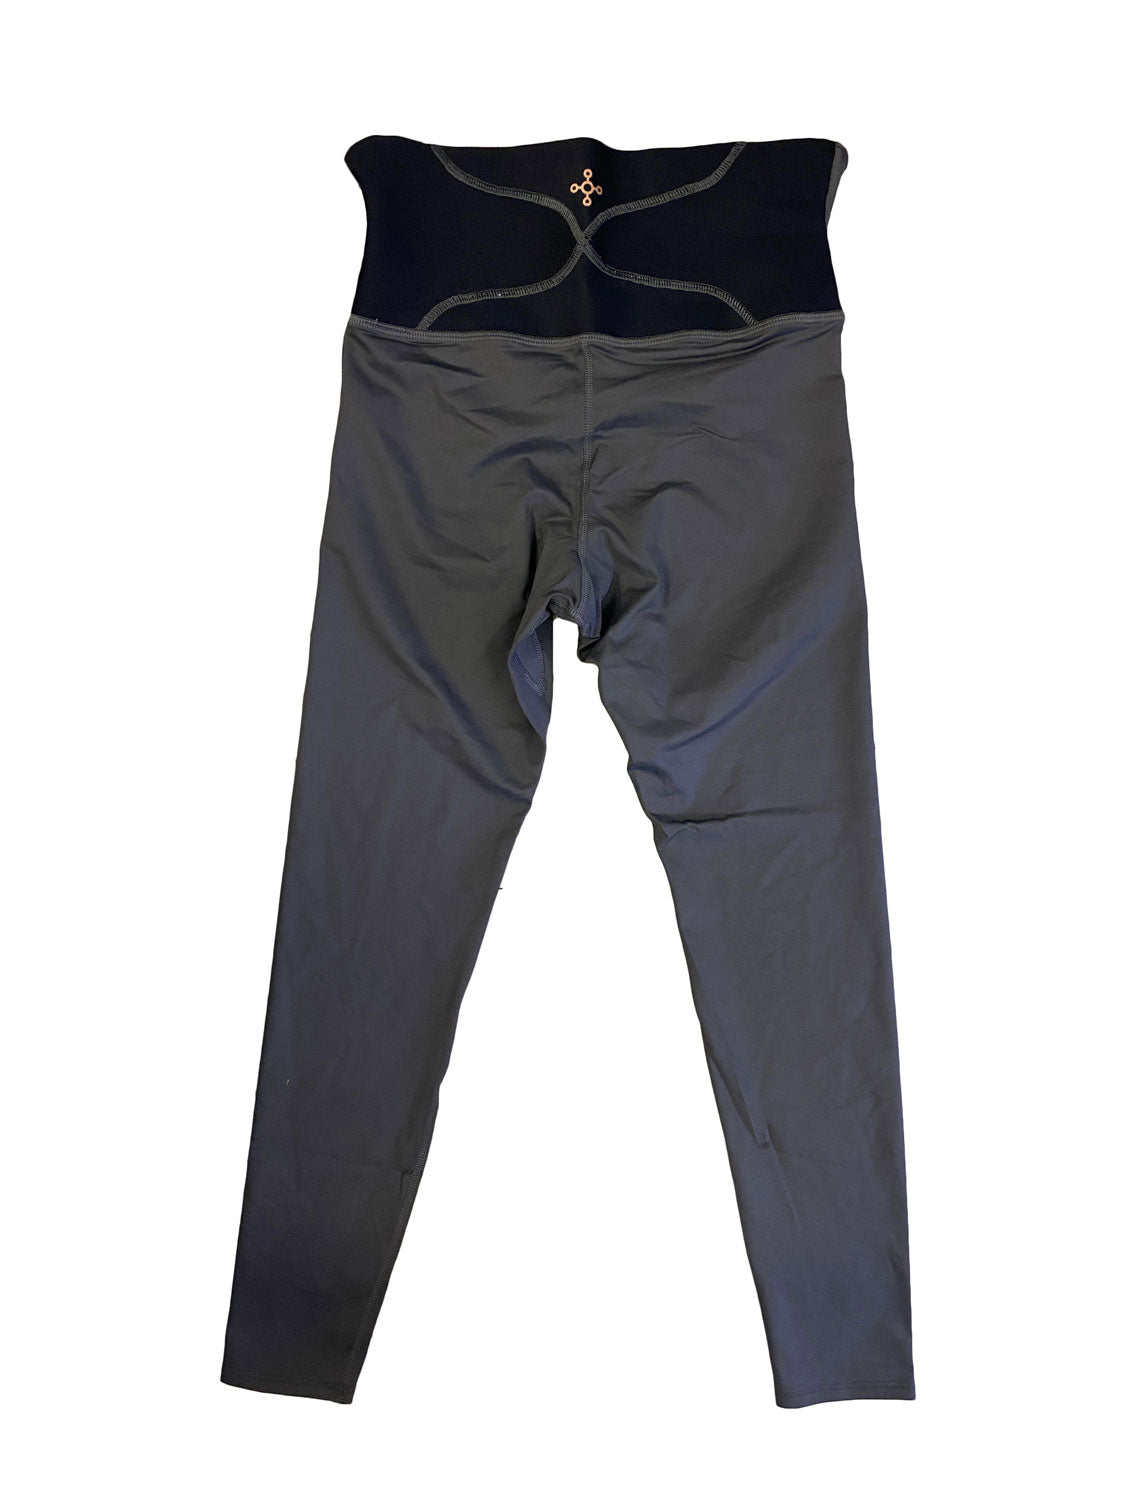 Tommie Copper Men's Core Compression Shorts : : Clothing